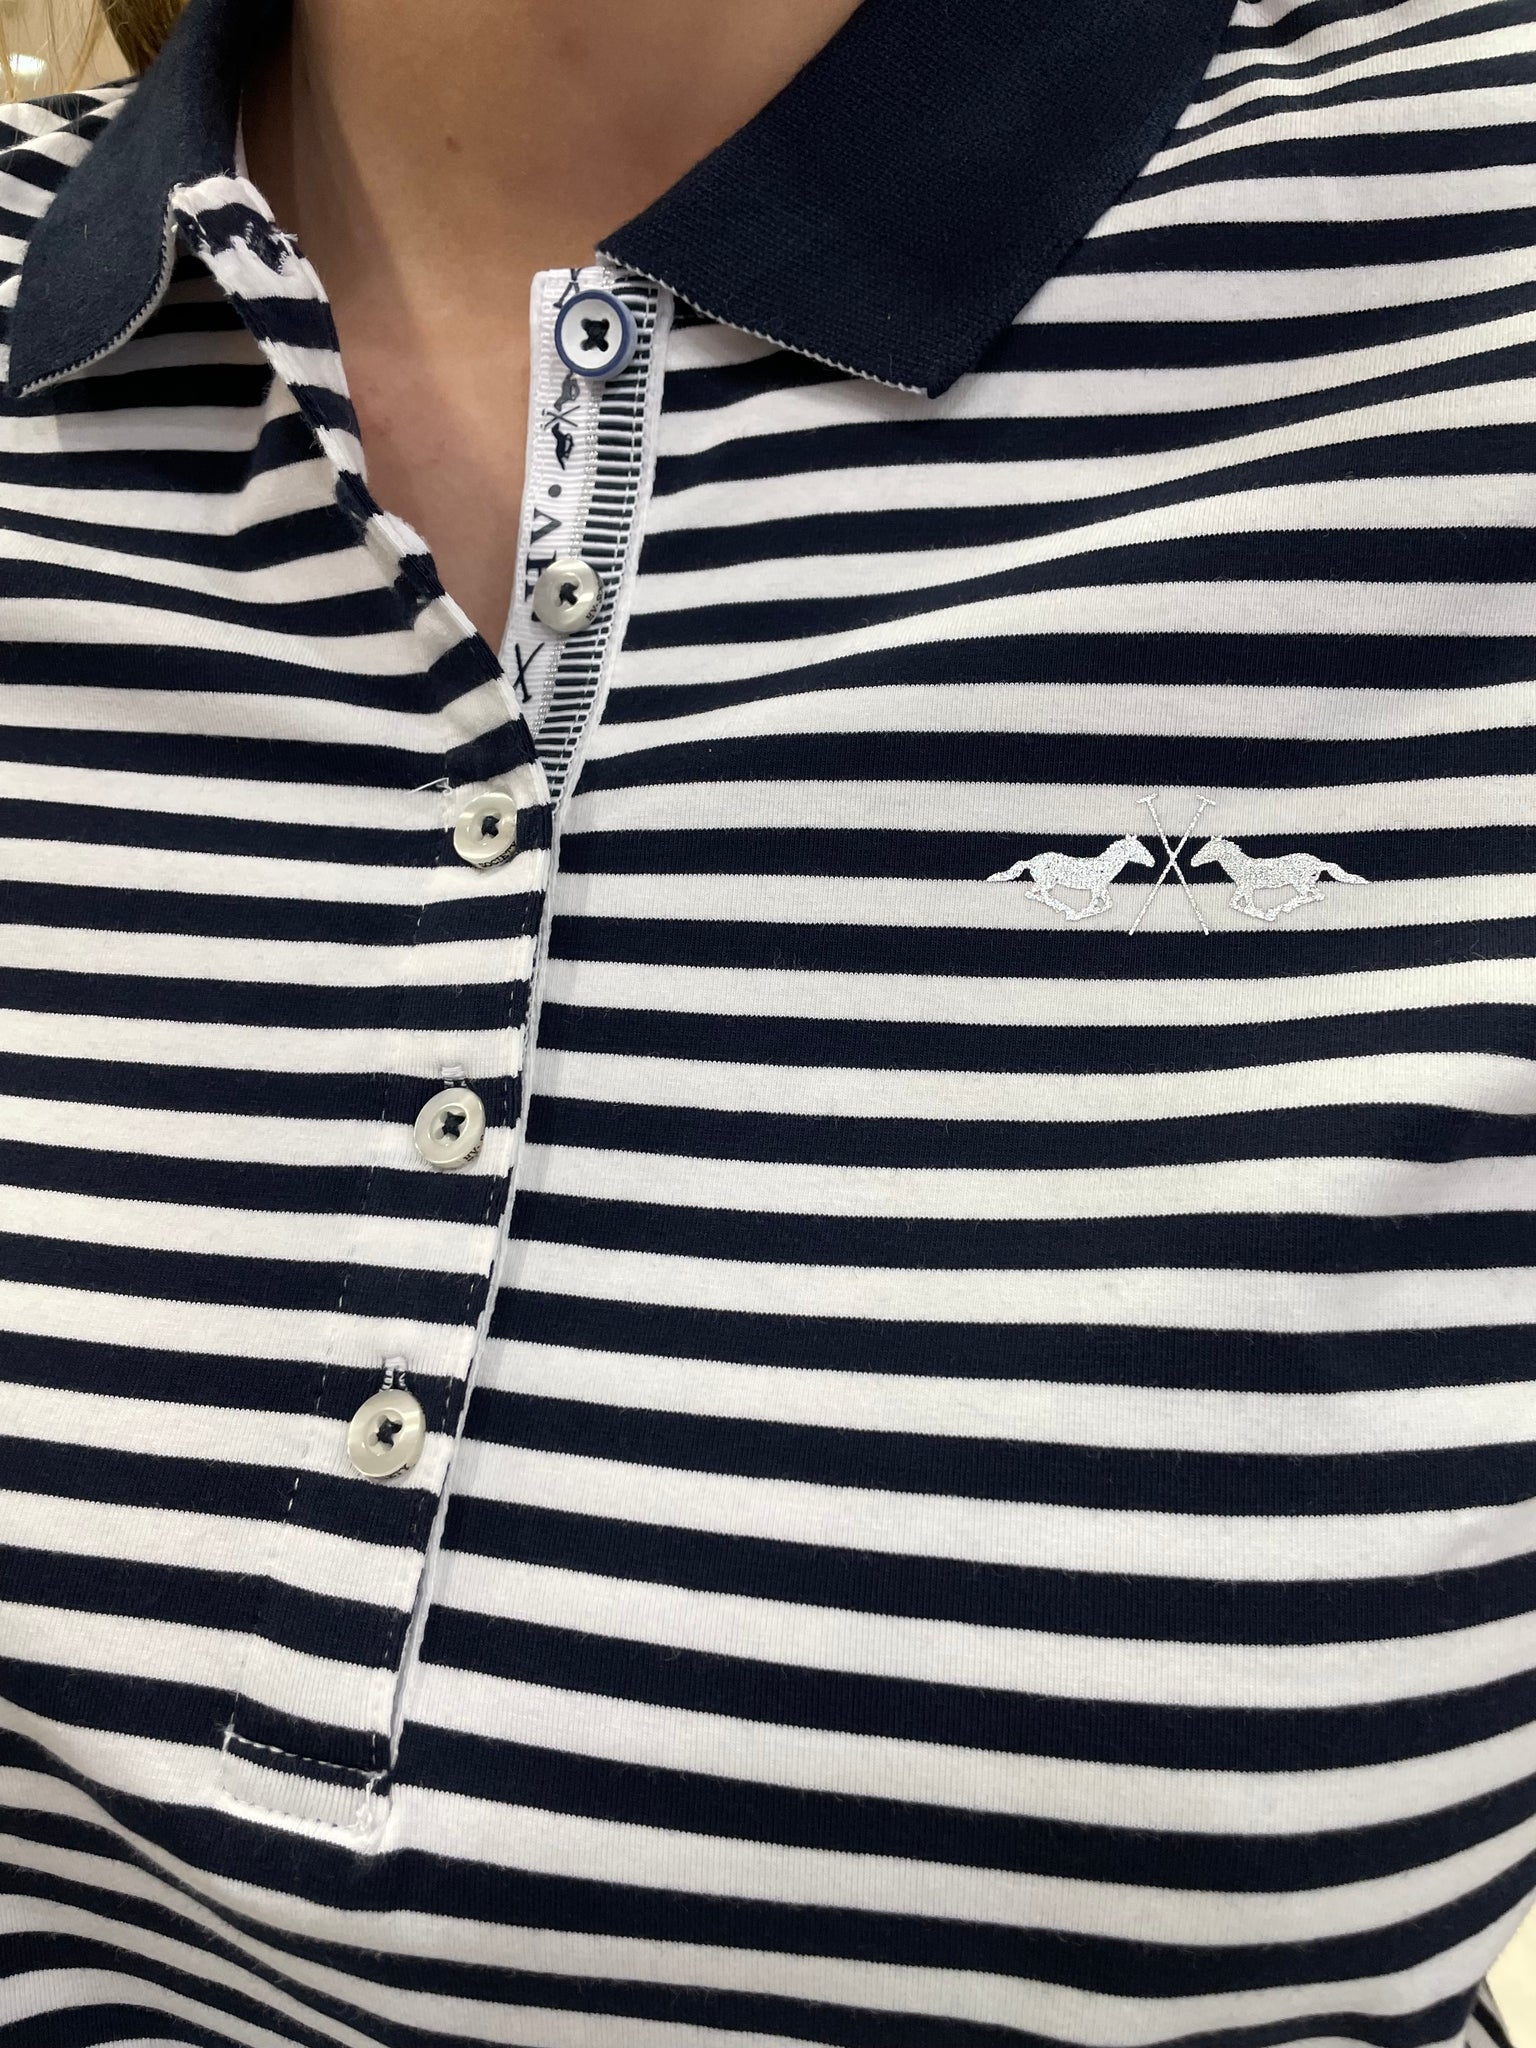 HV Polo Navy Stripe Polo Shirt